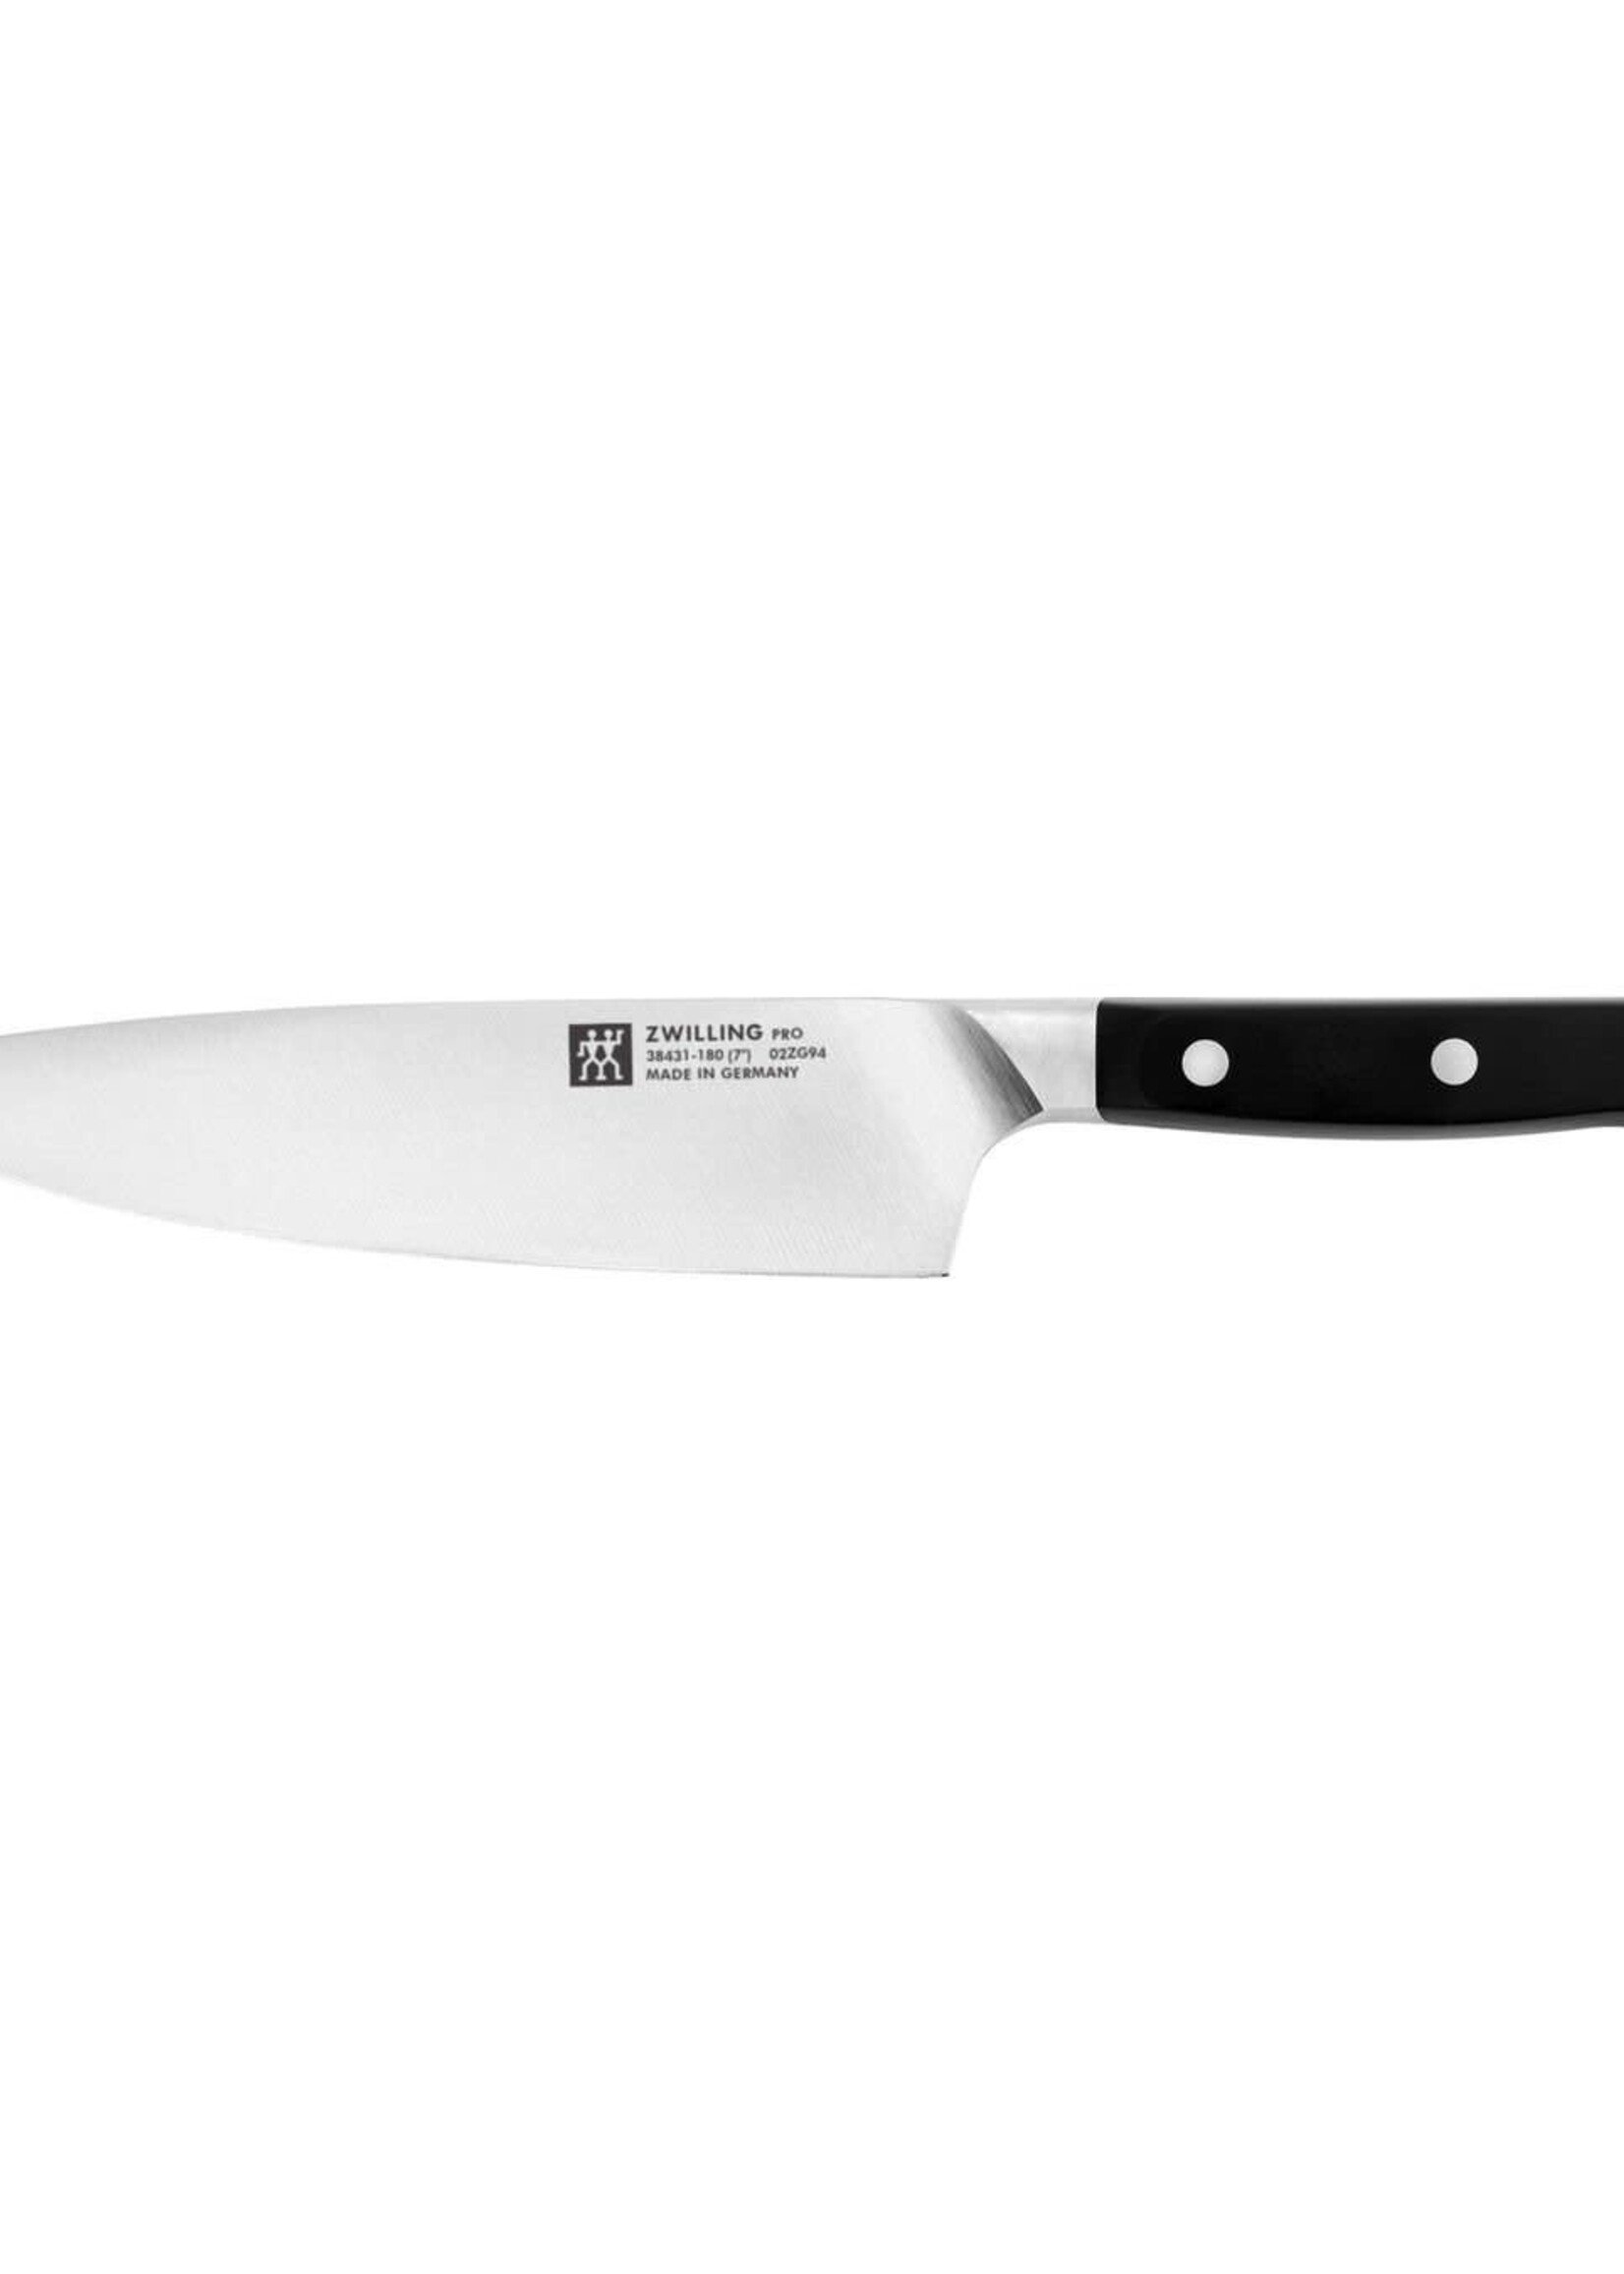 Zwilling Pro 7" Slim Chef's Knife Kicker